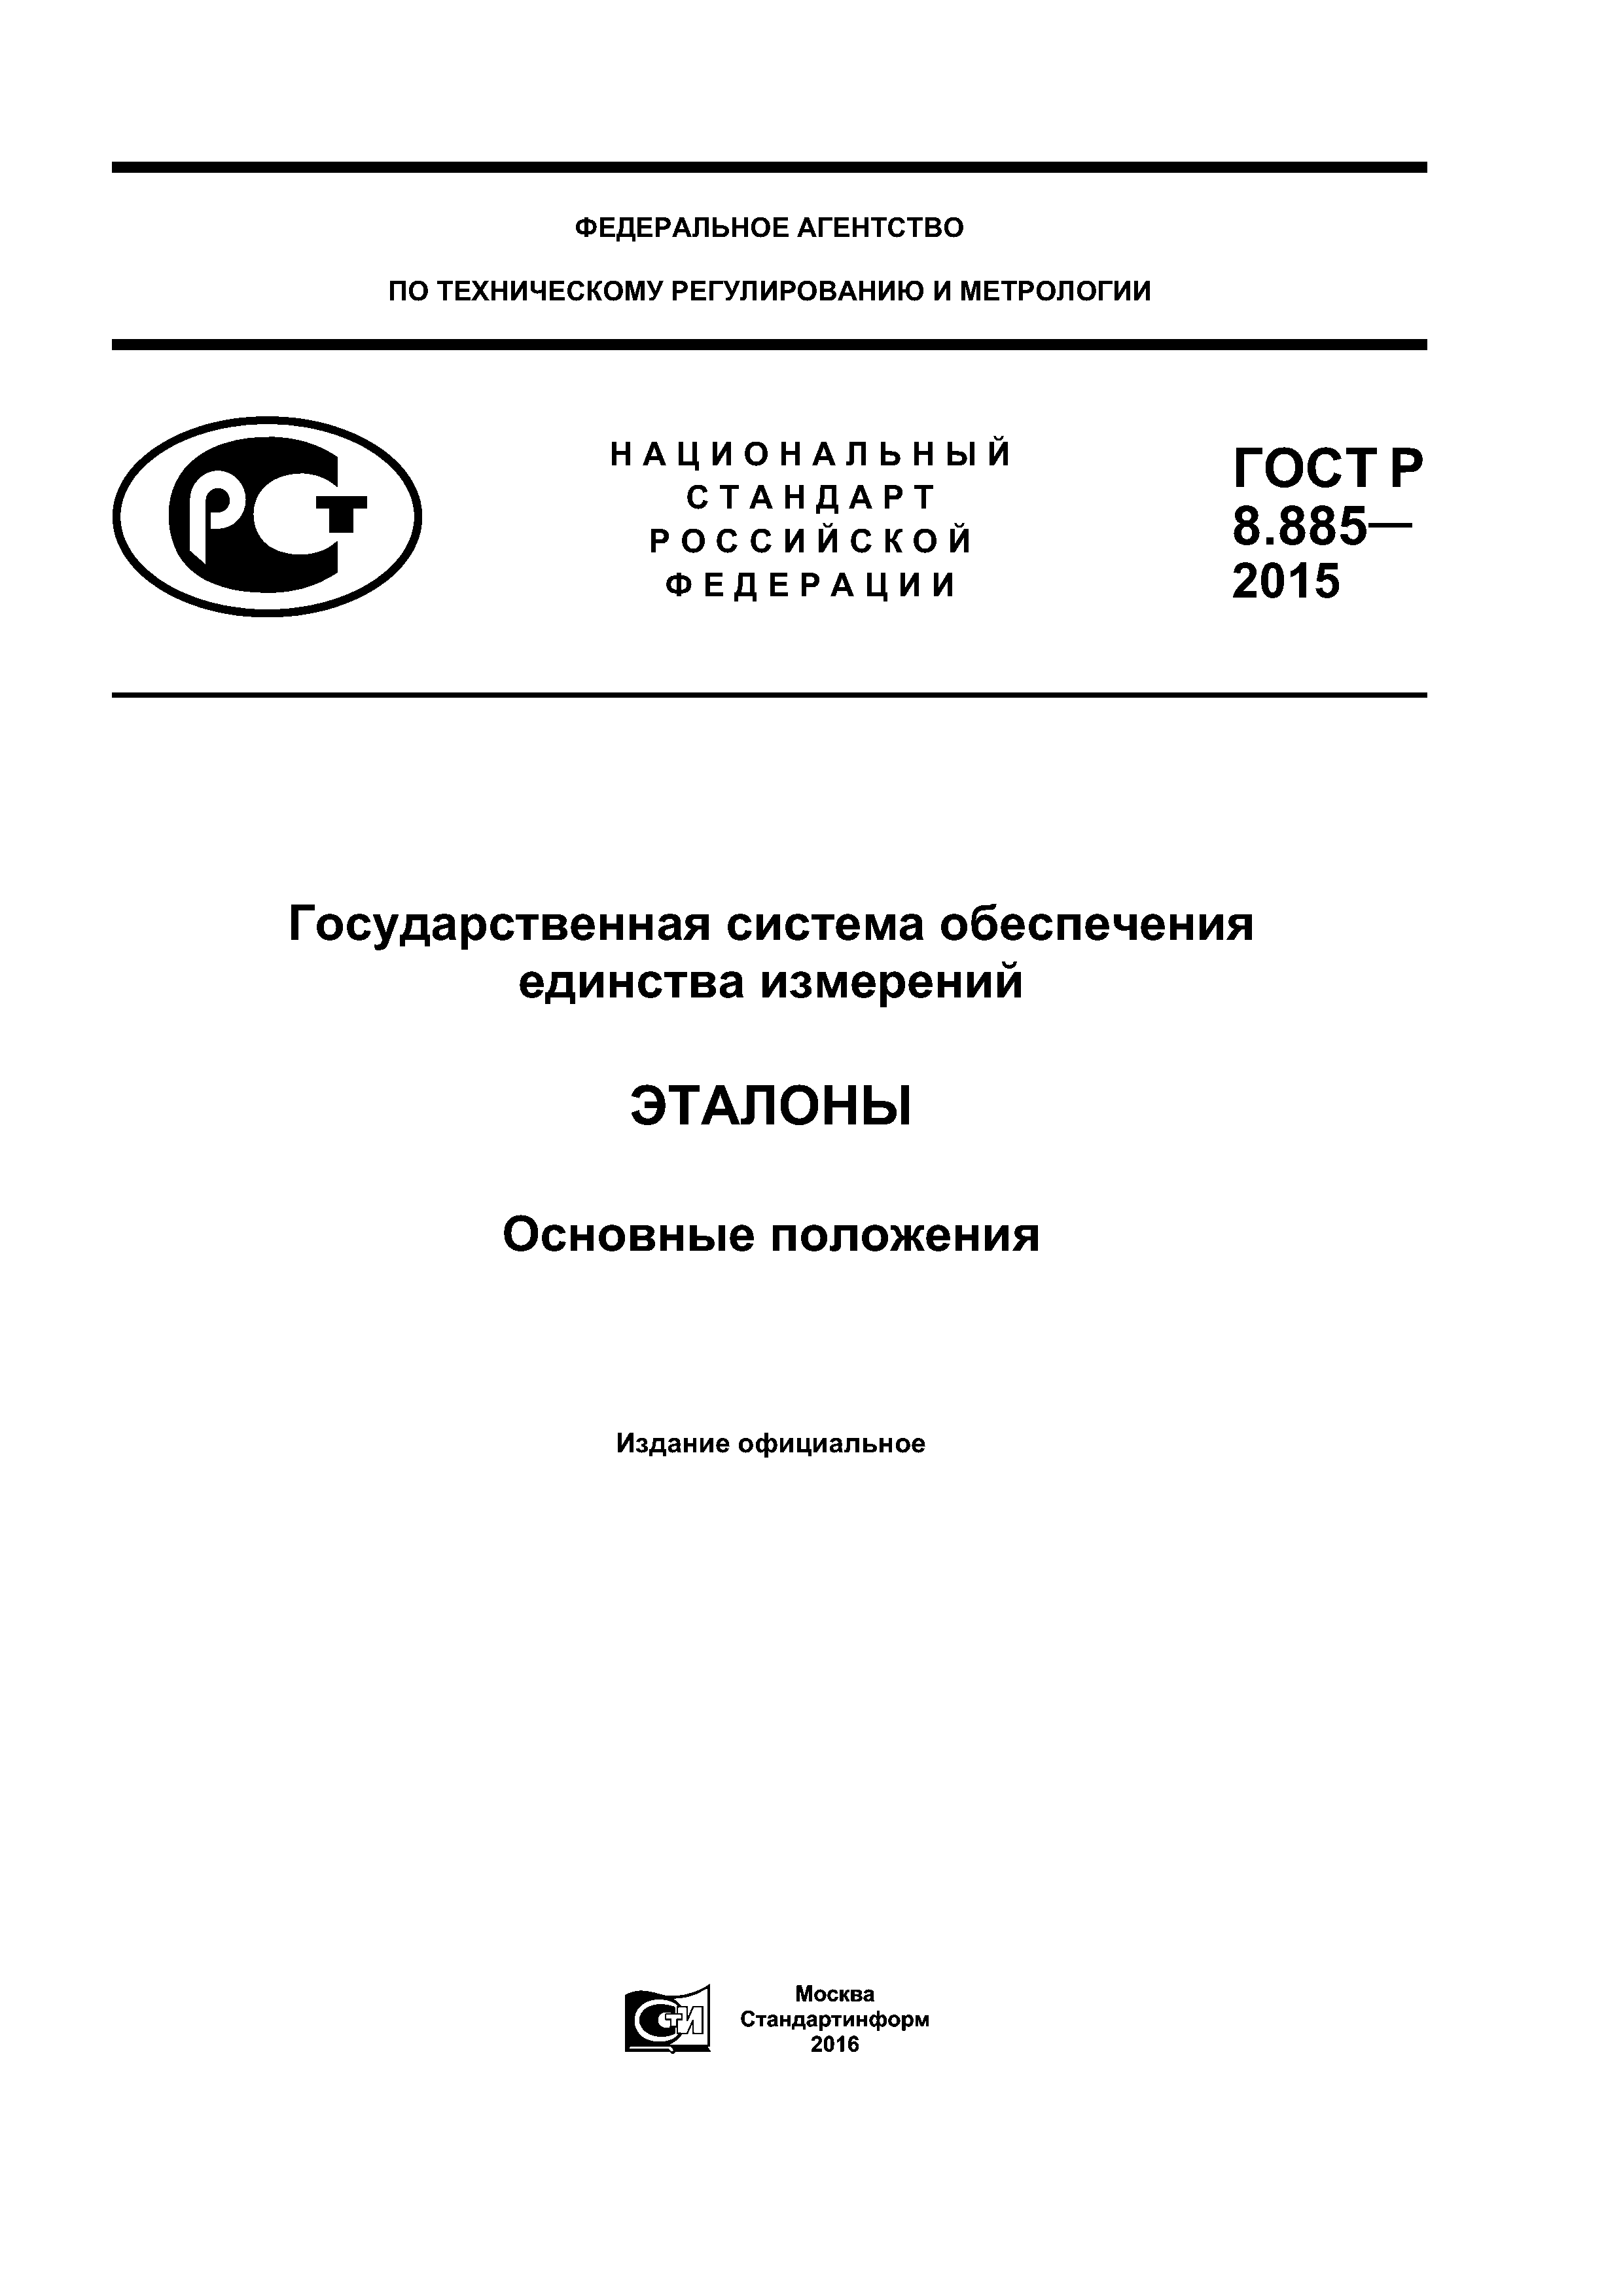 ГОСТ Р 8.885-2015